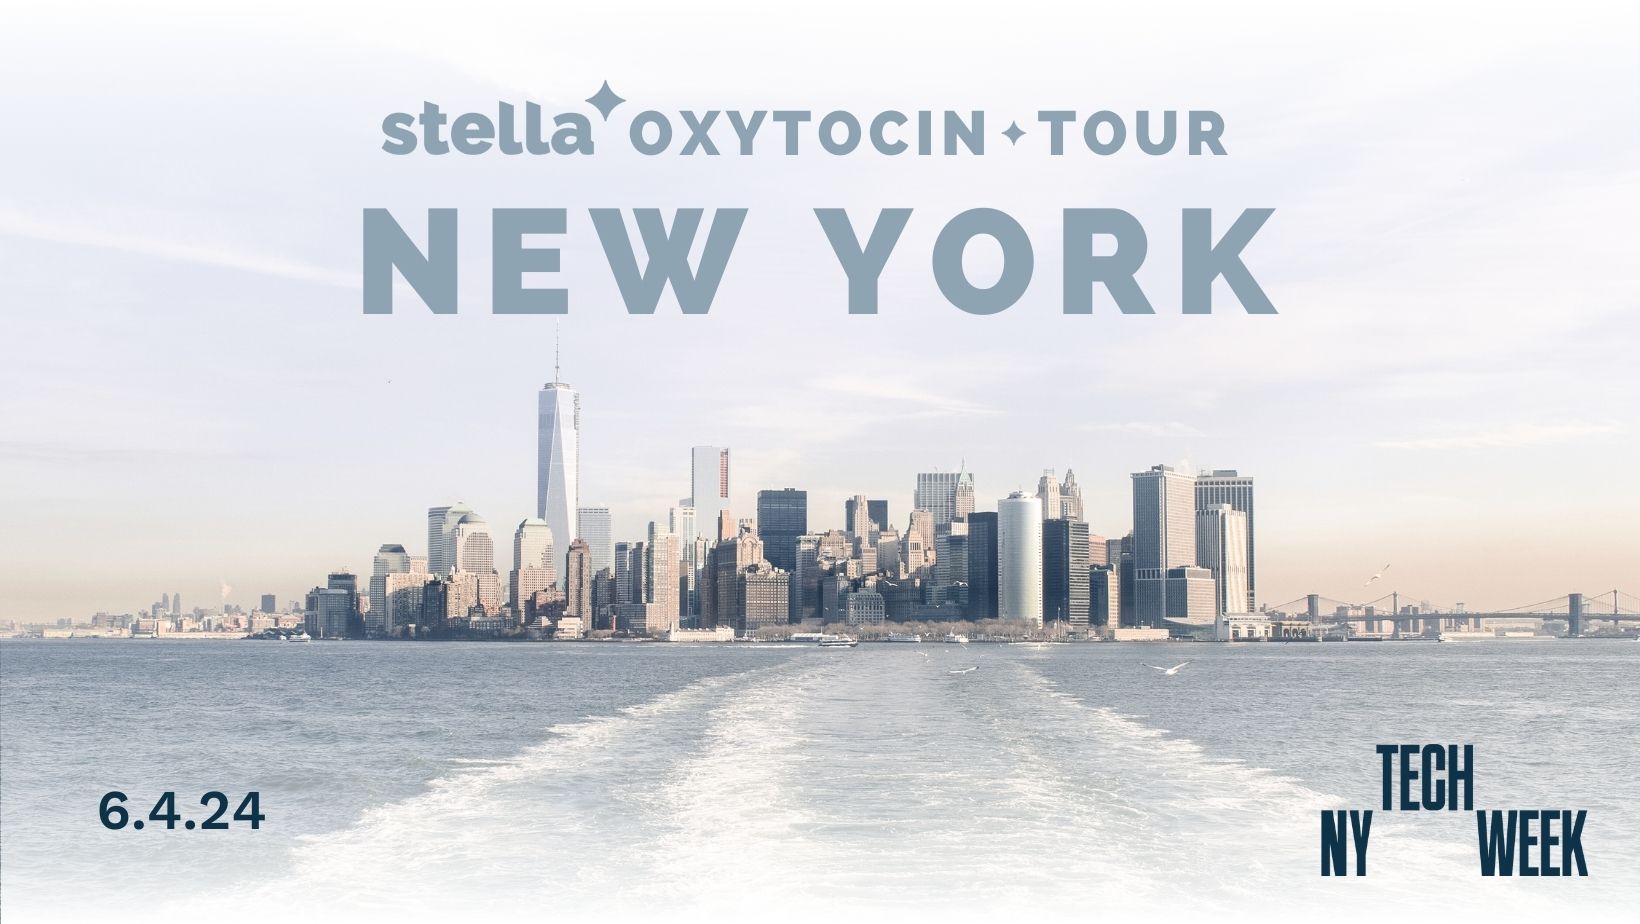 New York Oxytocin